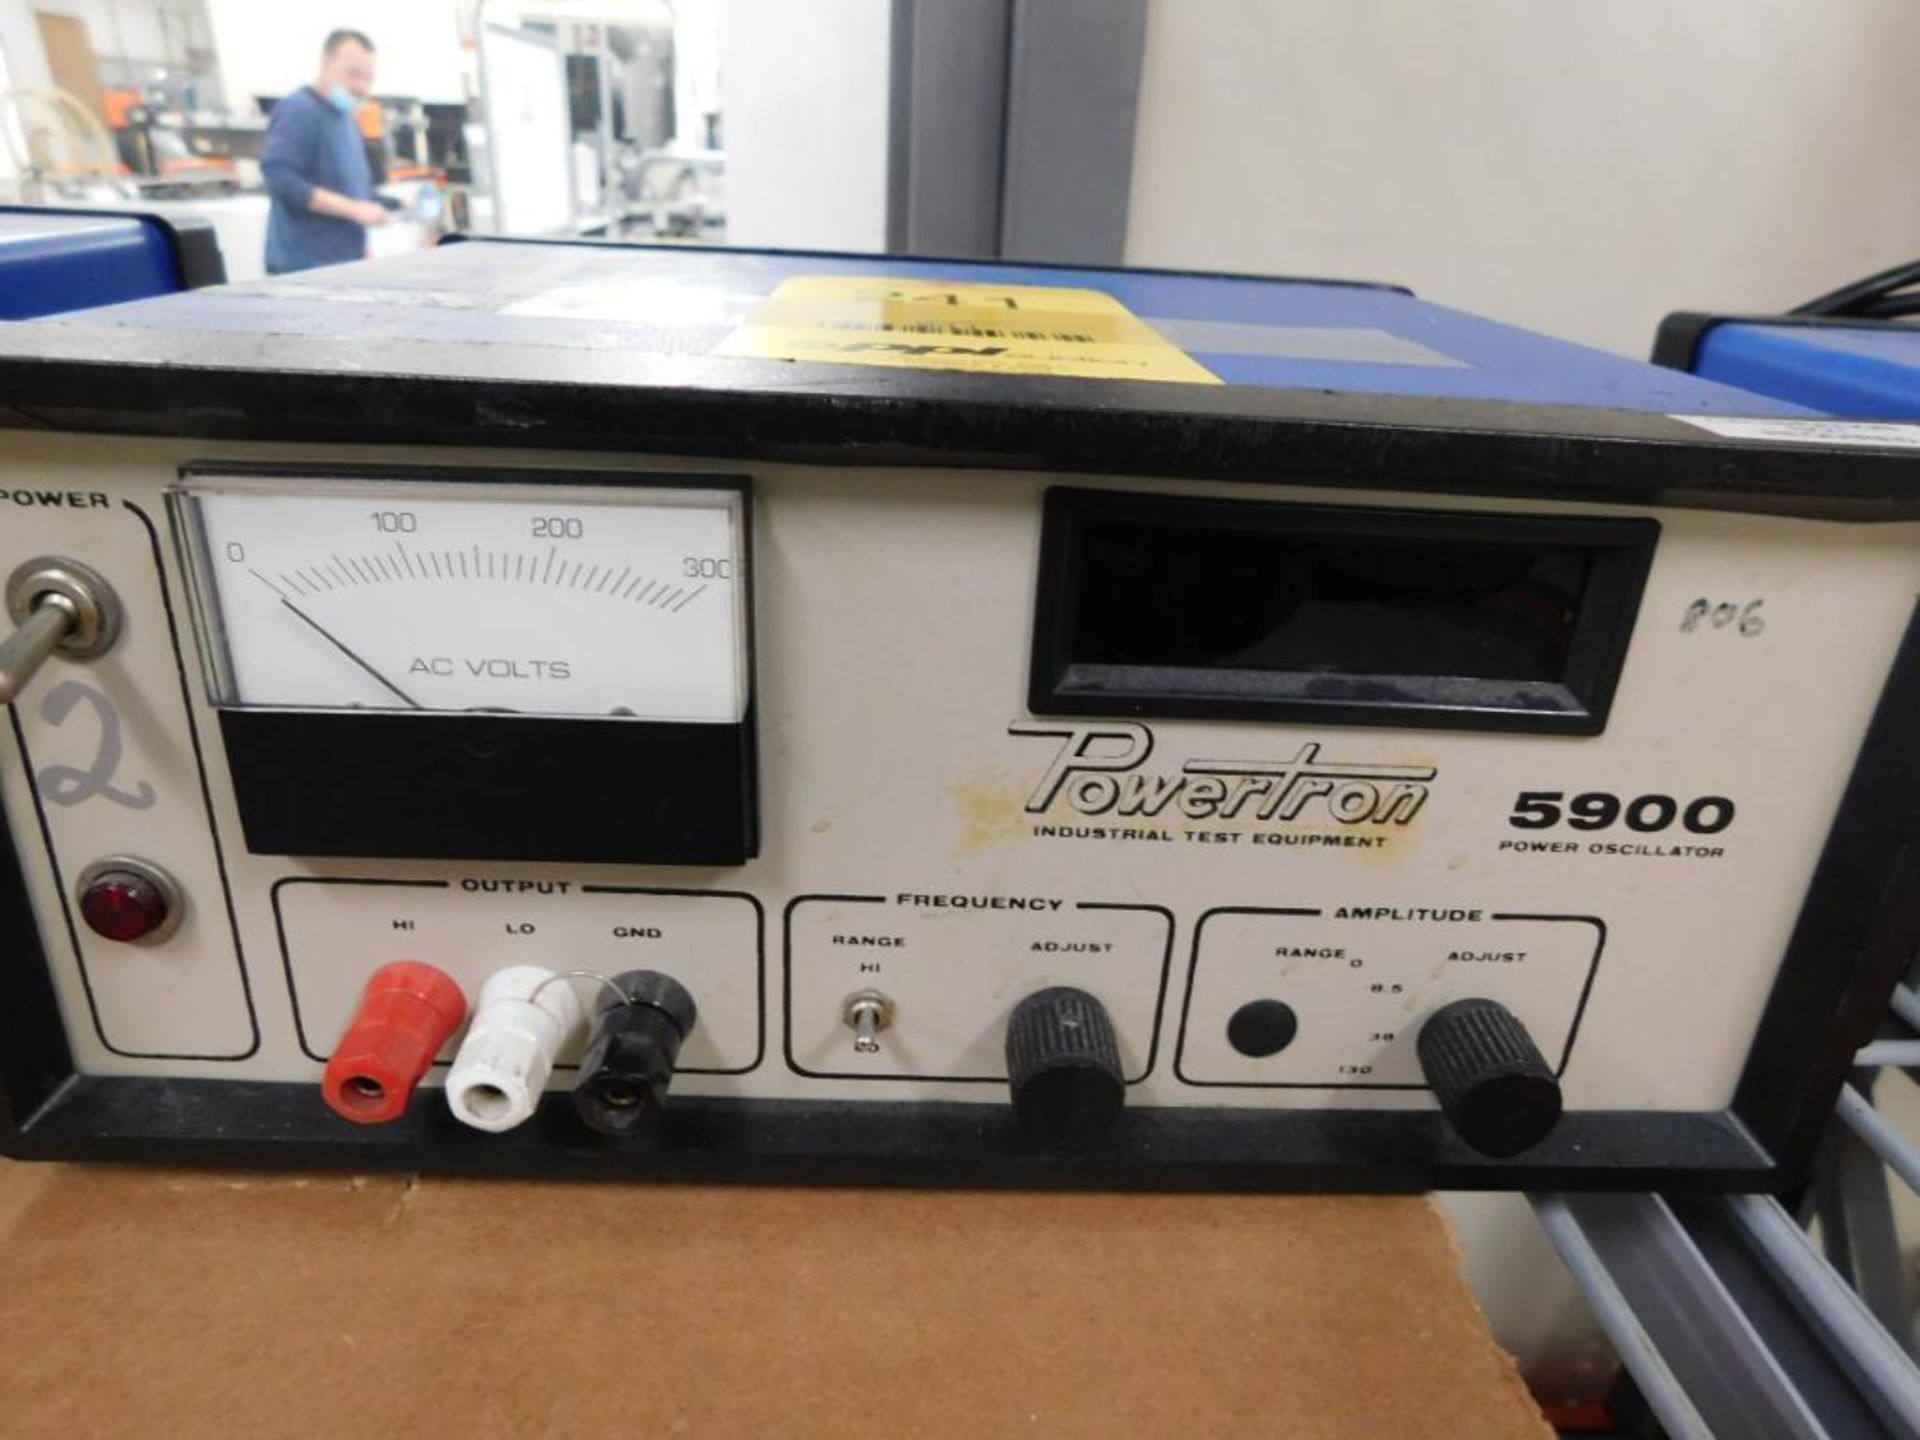 Powertron 5900 Power Oscillator